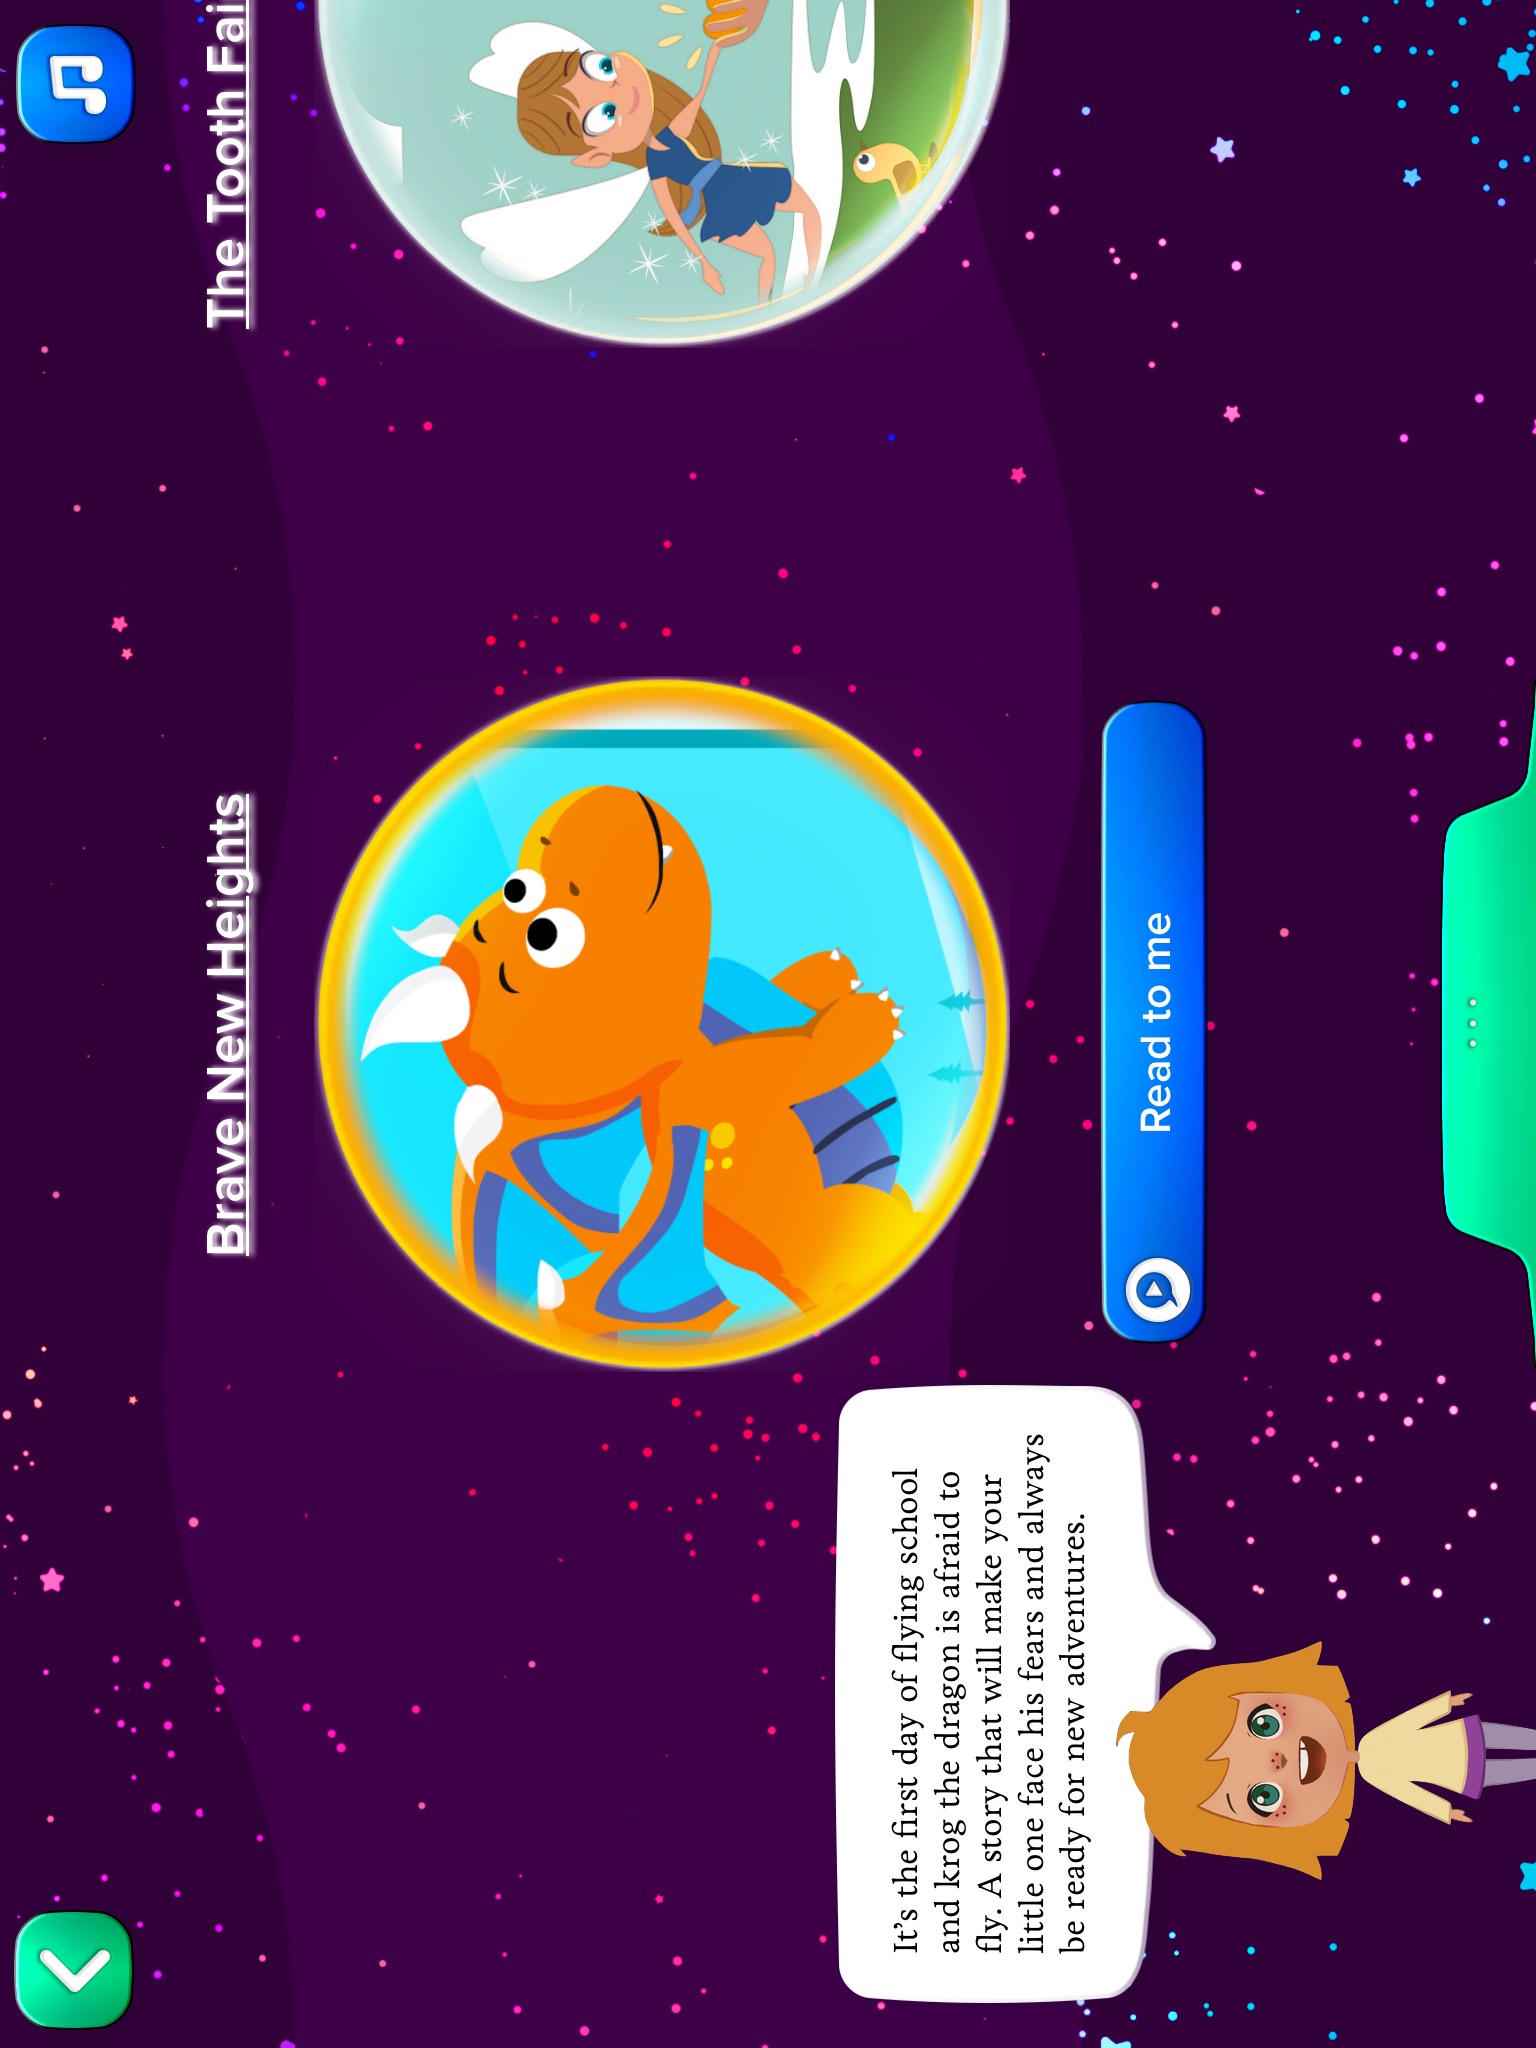 Vuelo - Stories for kids screenshot 2